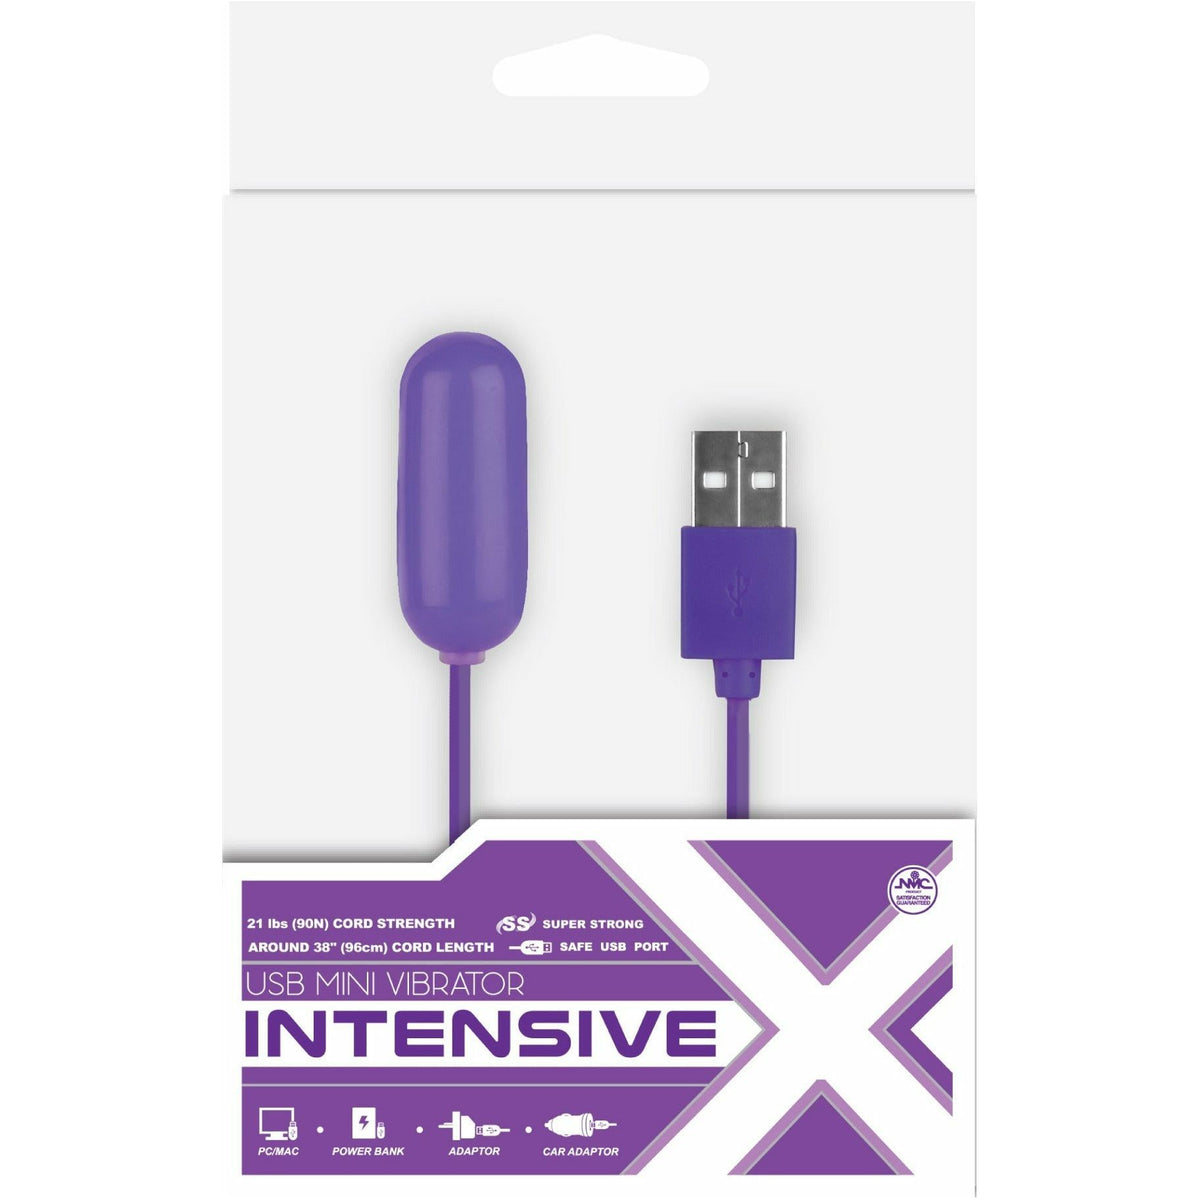 NMC Intensive X - Mini Bullet Vibrator - Rechargeable - Purple